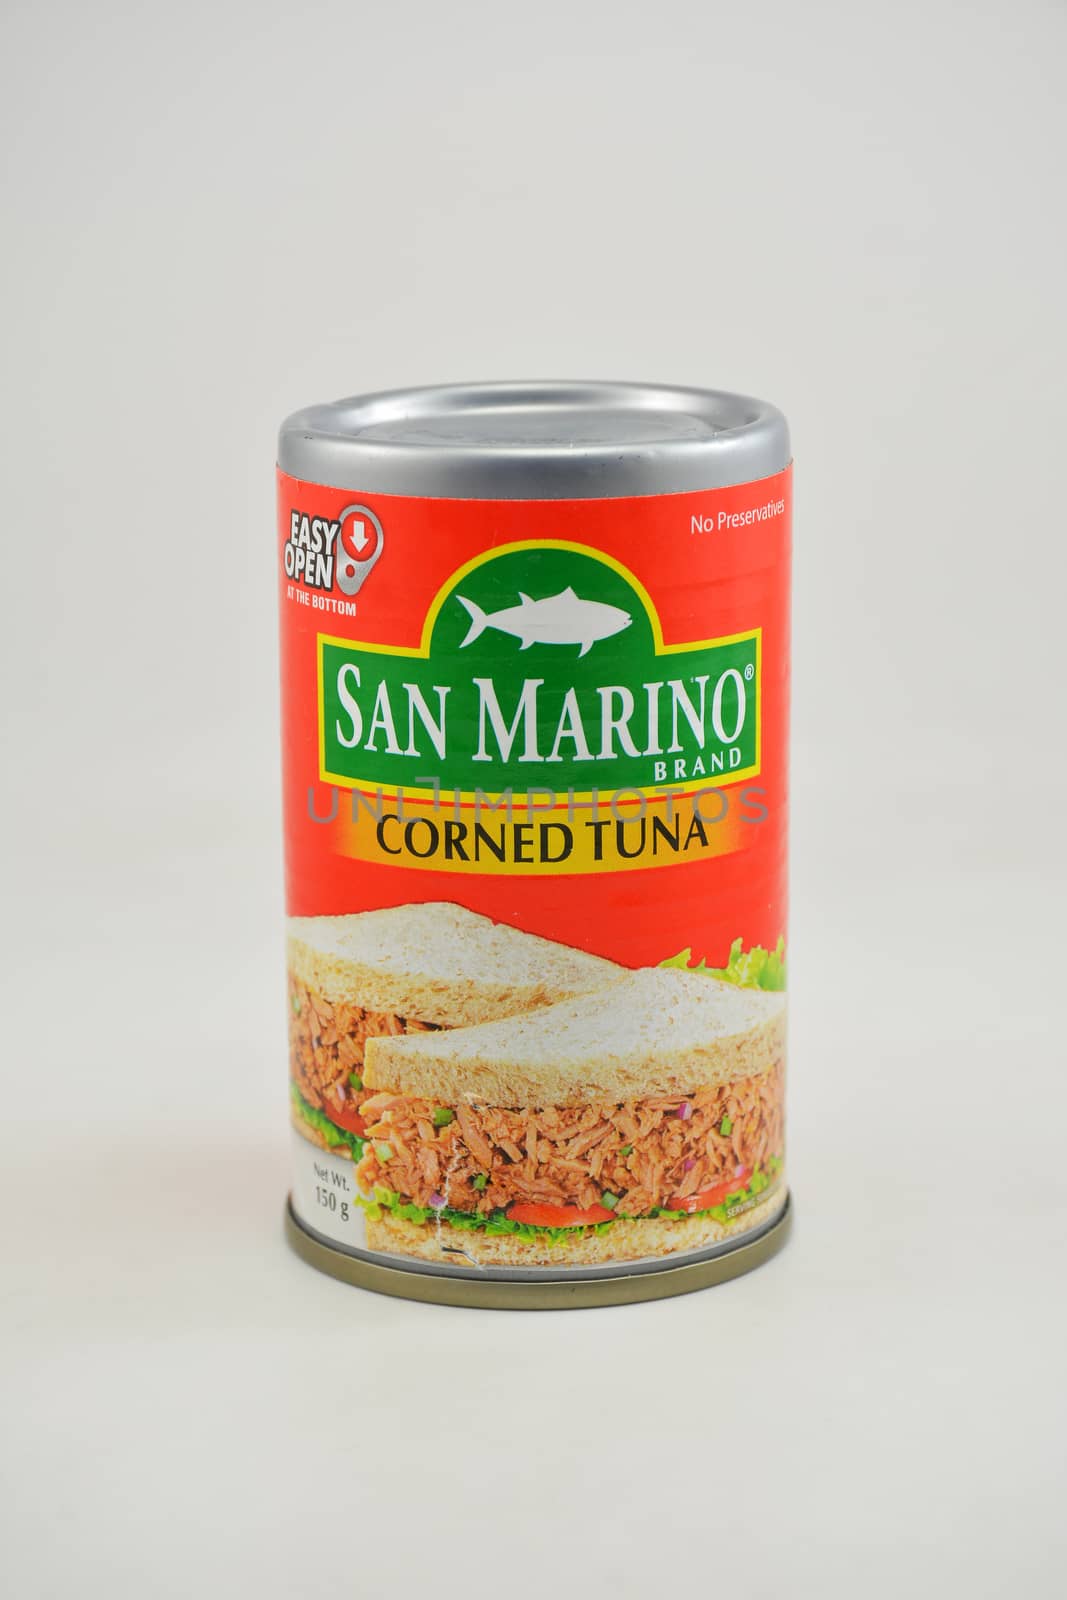 MANILA, PH - JUNE 26 - San Marino corned tuna can on June 26, 2020 in Manila, Philippines.